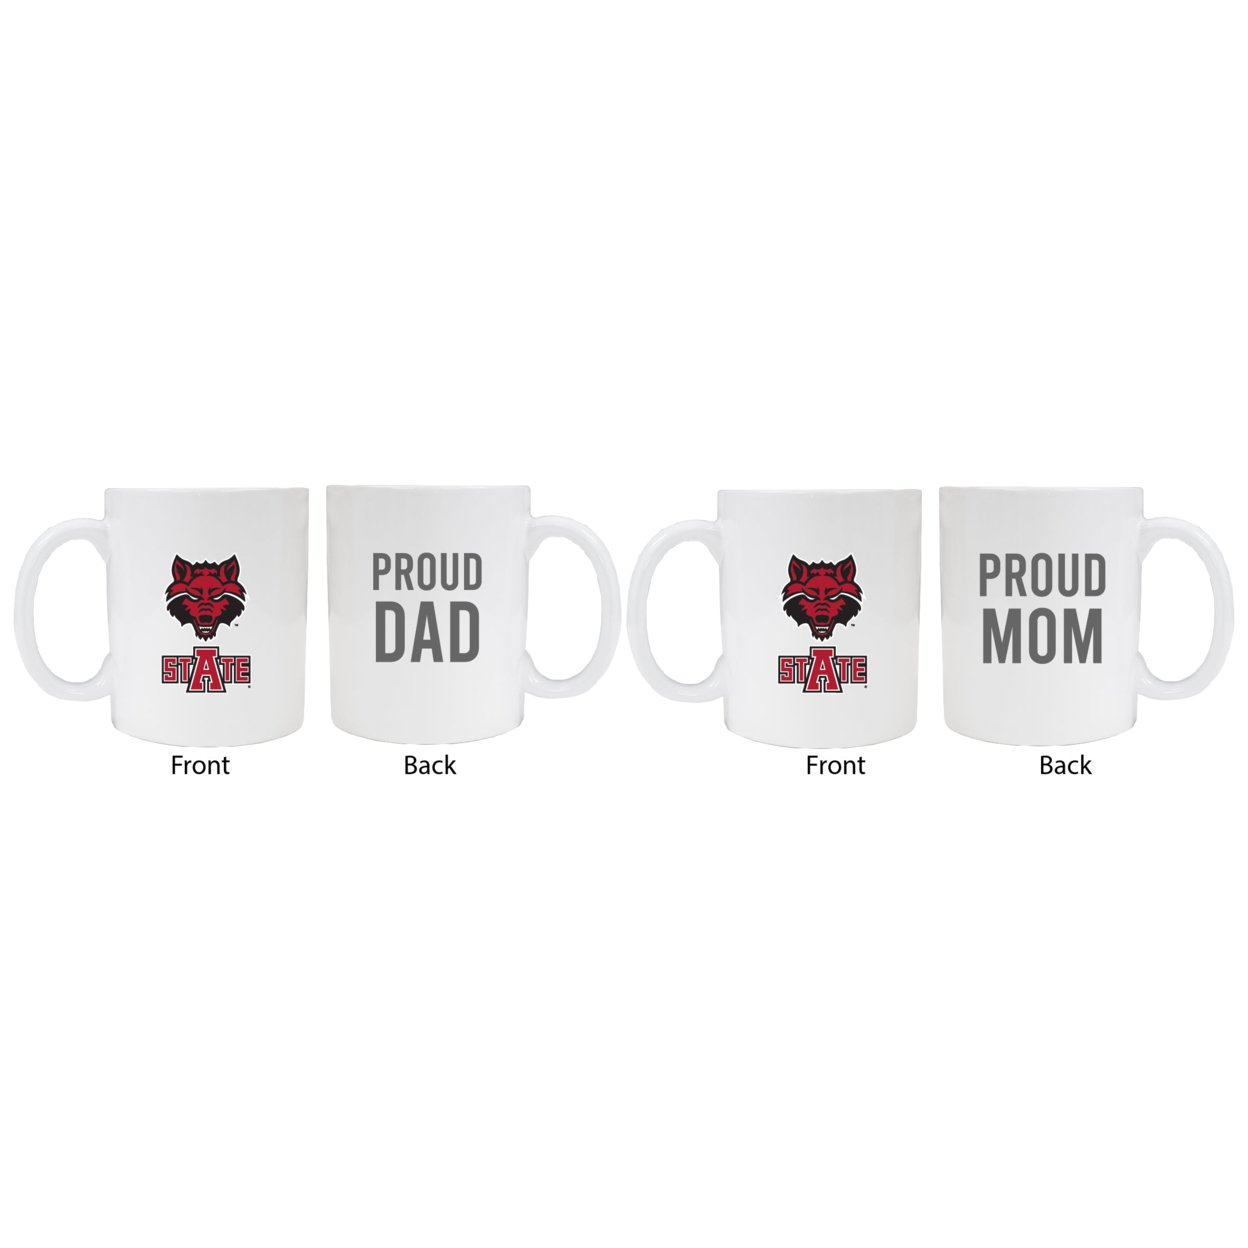 Arkansas State Proud Mom And Dad White Ceramic Coffee Mug 2 Pack (White).